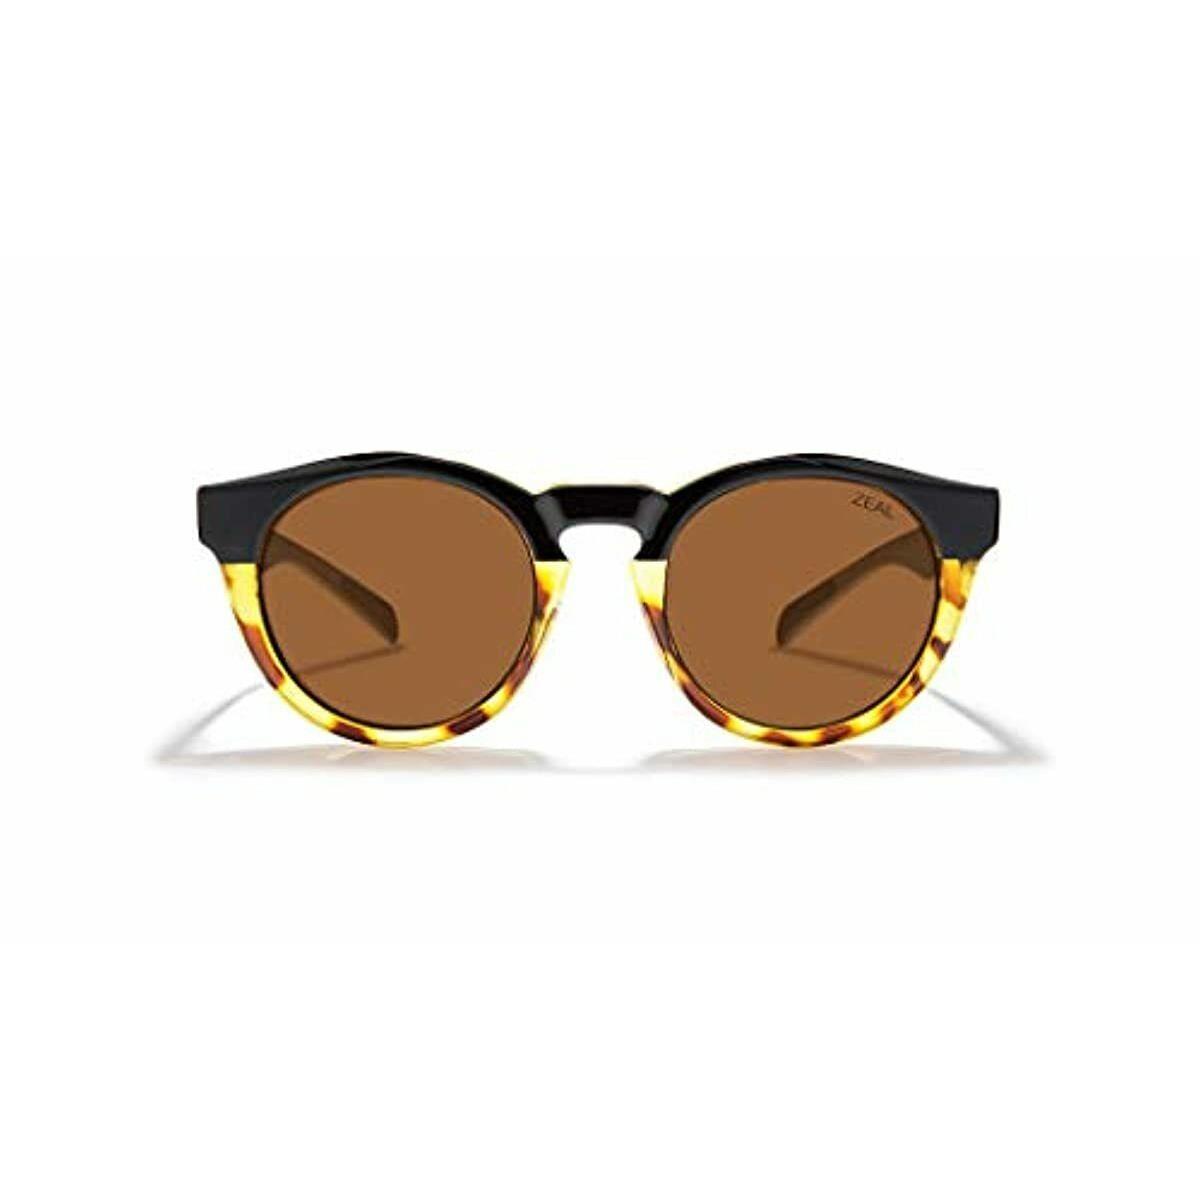 Zeal Optics sunglasses Christina Dior SoReal - Beige Frame, Beige Lens